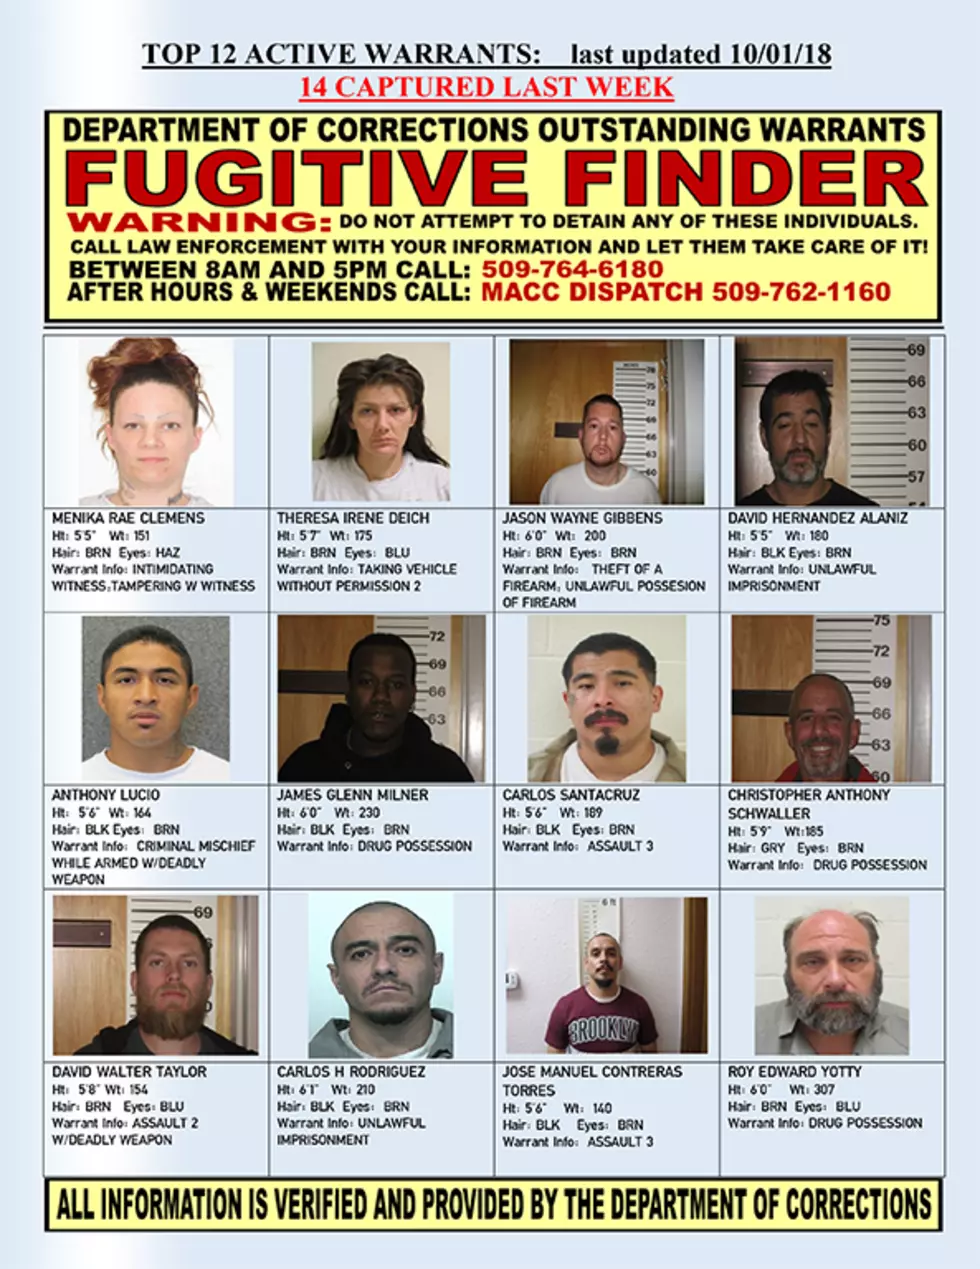 Friday’s Fugitive Finder Features All Kinds of Folks